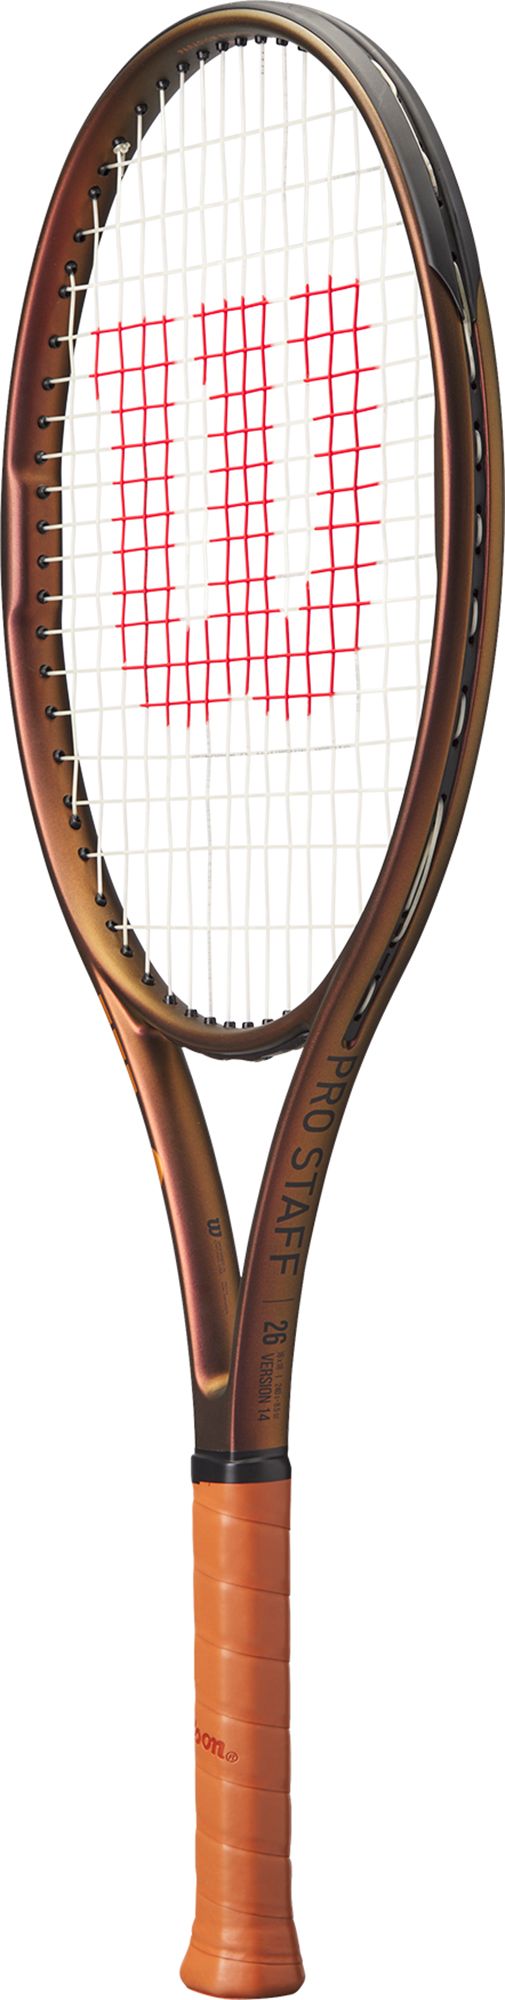 Dick's Sporting Goods Wilson Pro Staff 26 V14 Tennis Racquet